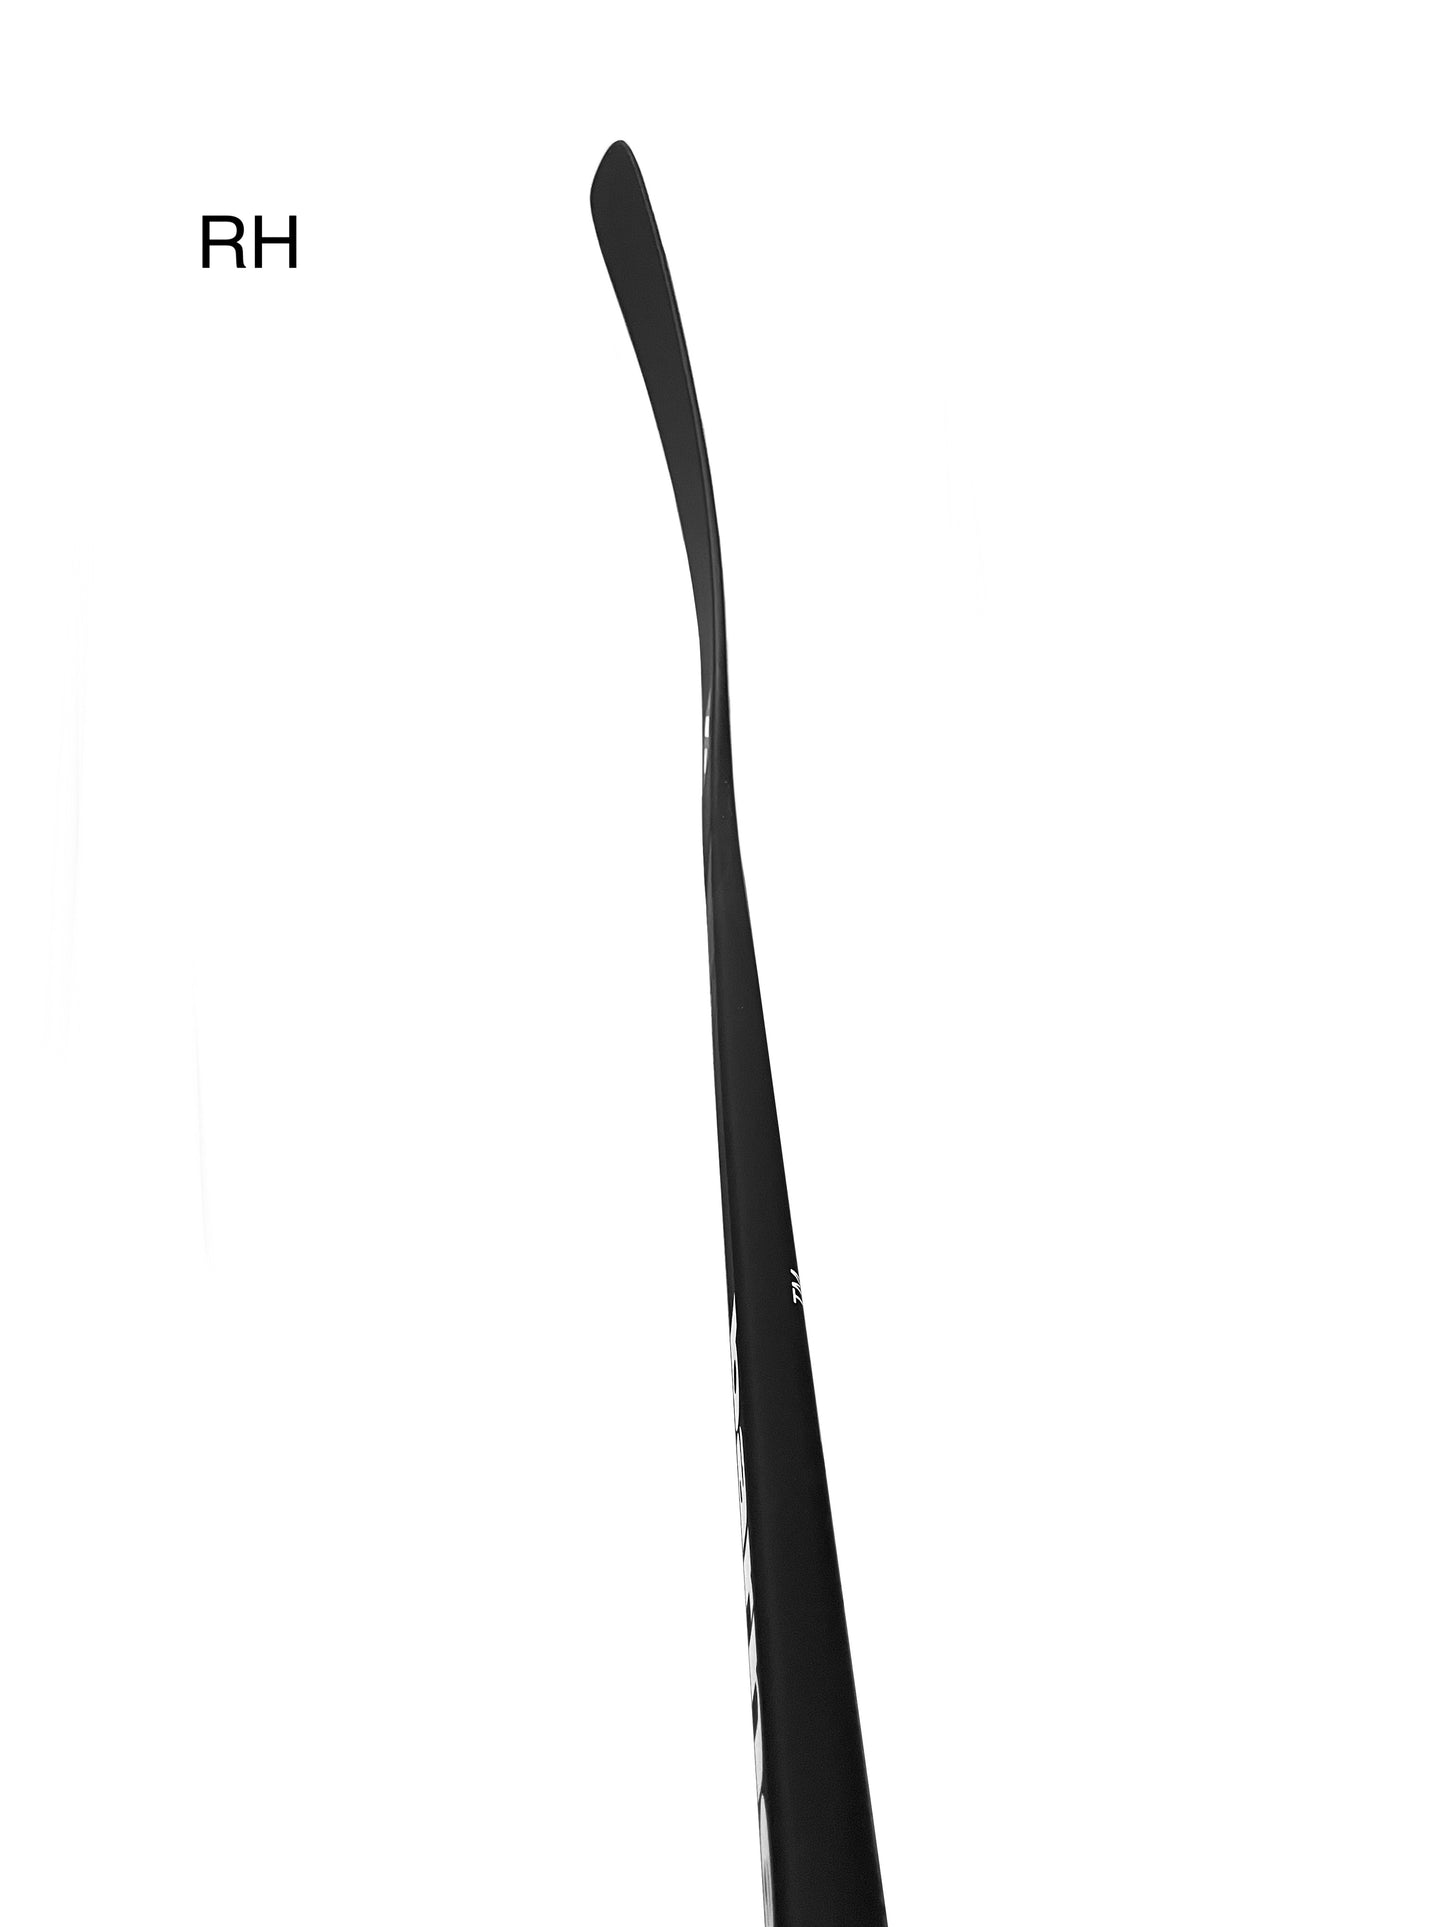 HS-INT carbon hockey stick